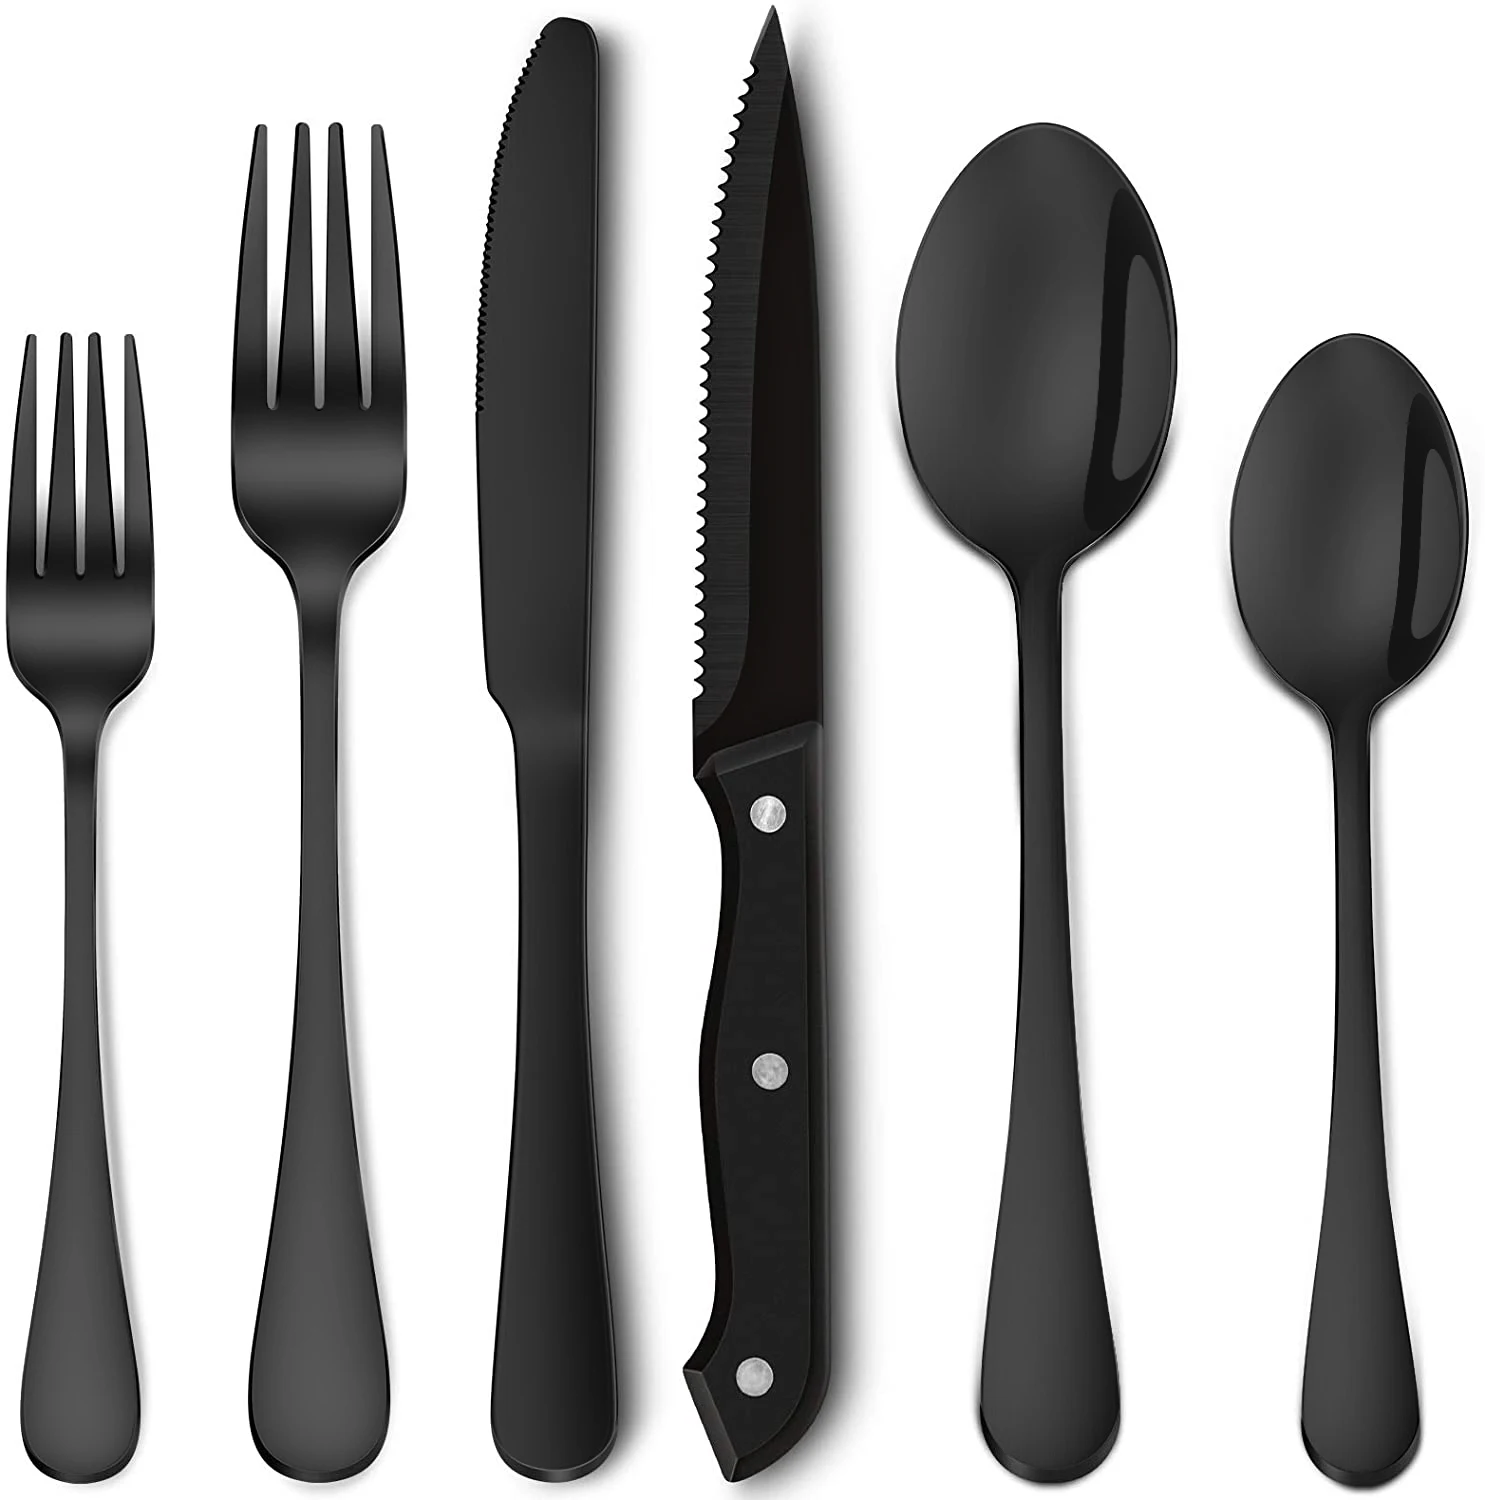 

High Quality Bulk Bestek Hotel Home Knife Spoon Fork Set Wedding Silver Black Silverwar Flatware Stainless Steel Cutlery Set, Black sliver customizable